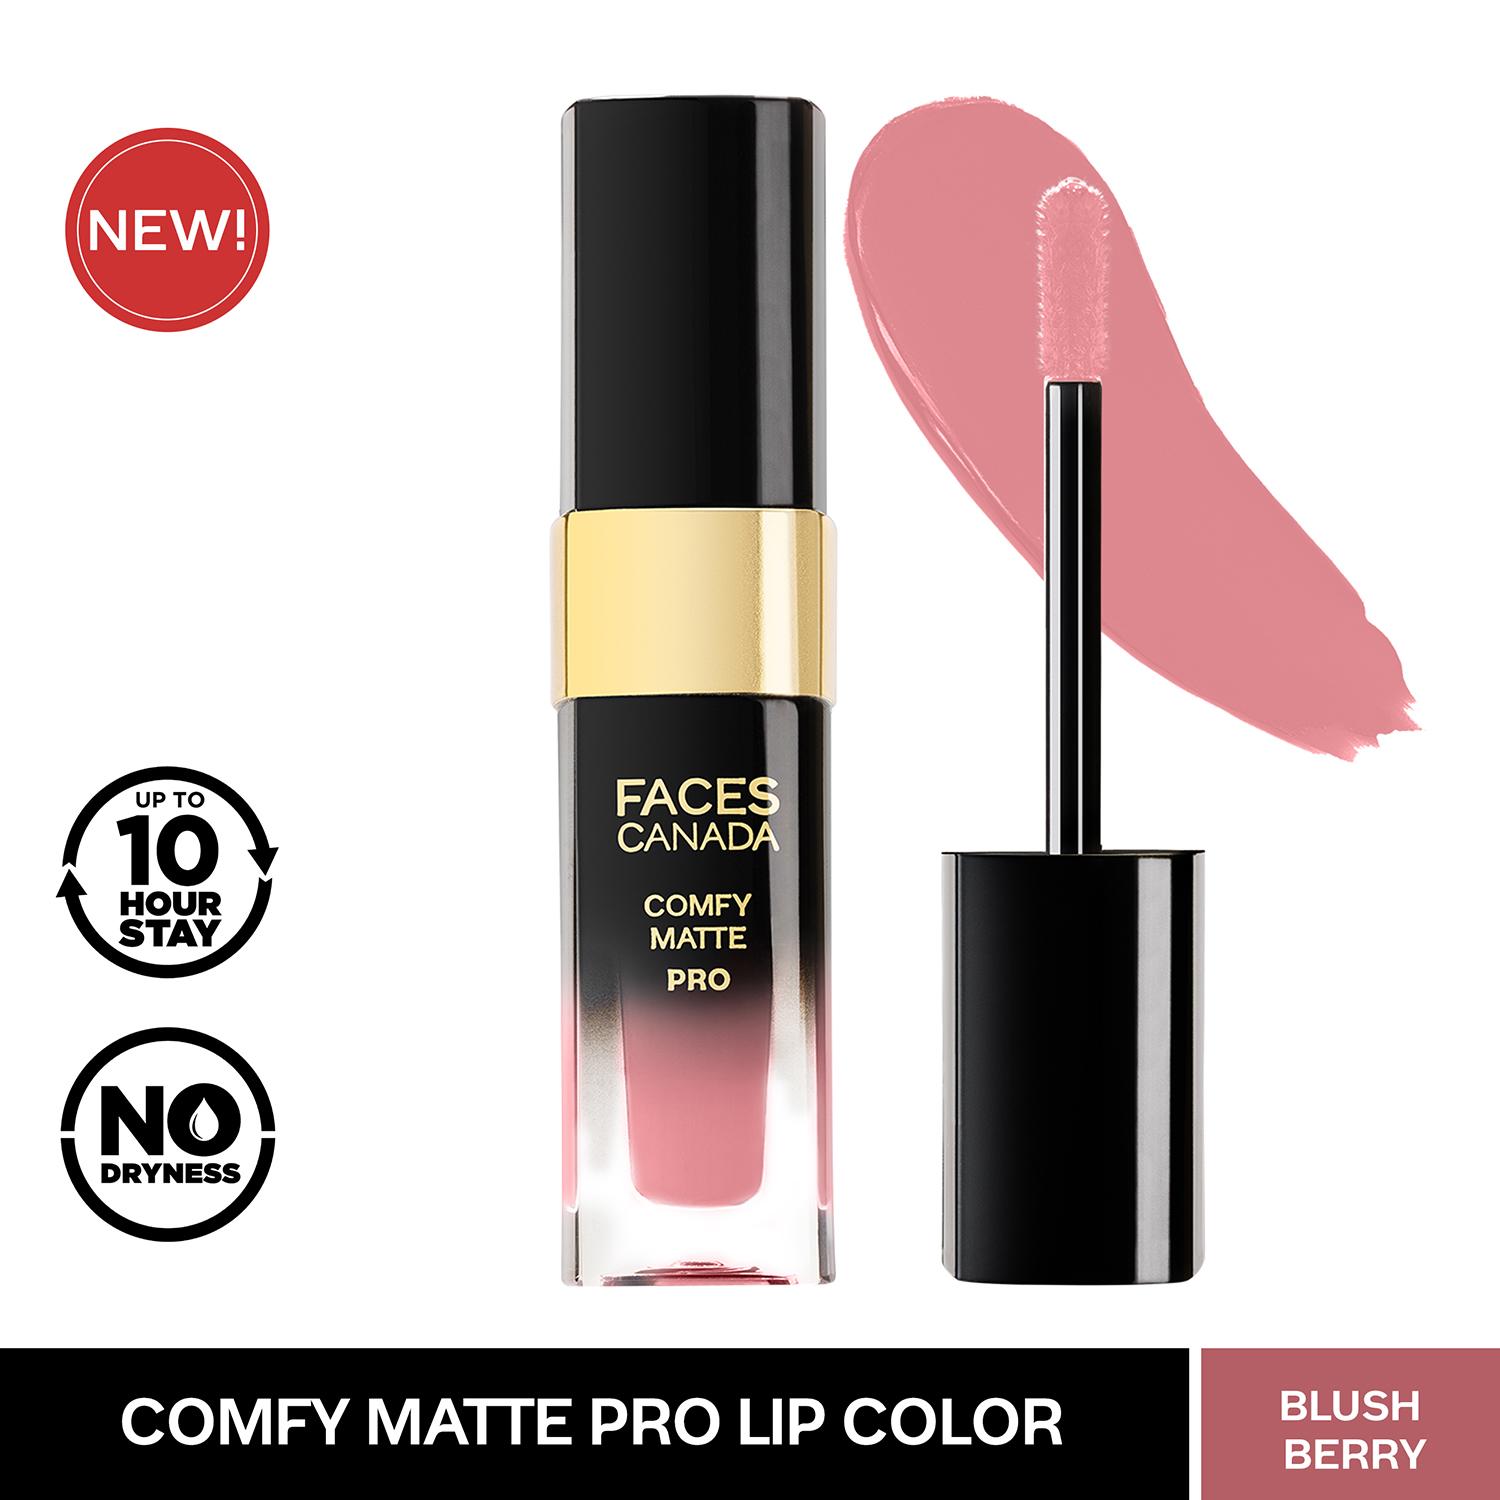 Faces Canada | Faces Canada Comfy Matte Pro Liquid Lipstick - Blush Berry 18, 10HR Stay, No Dryness (5.5 ml)